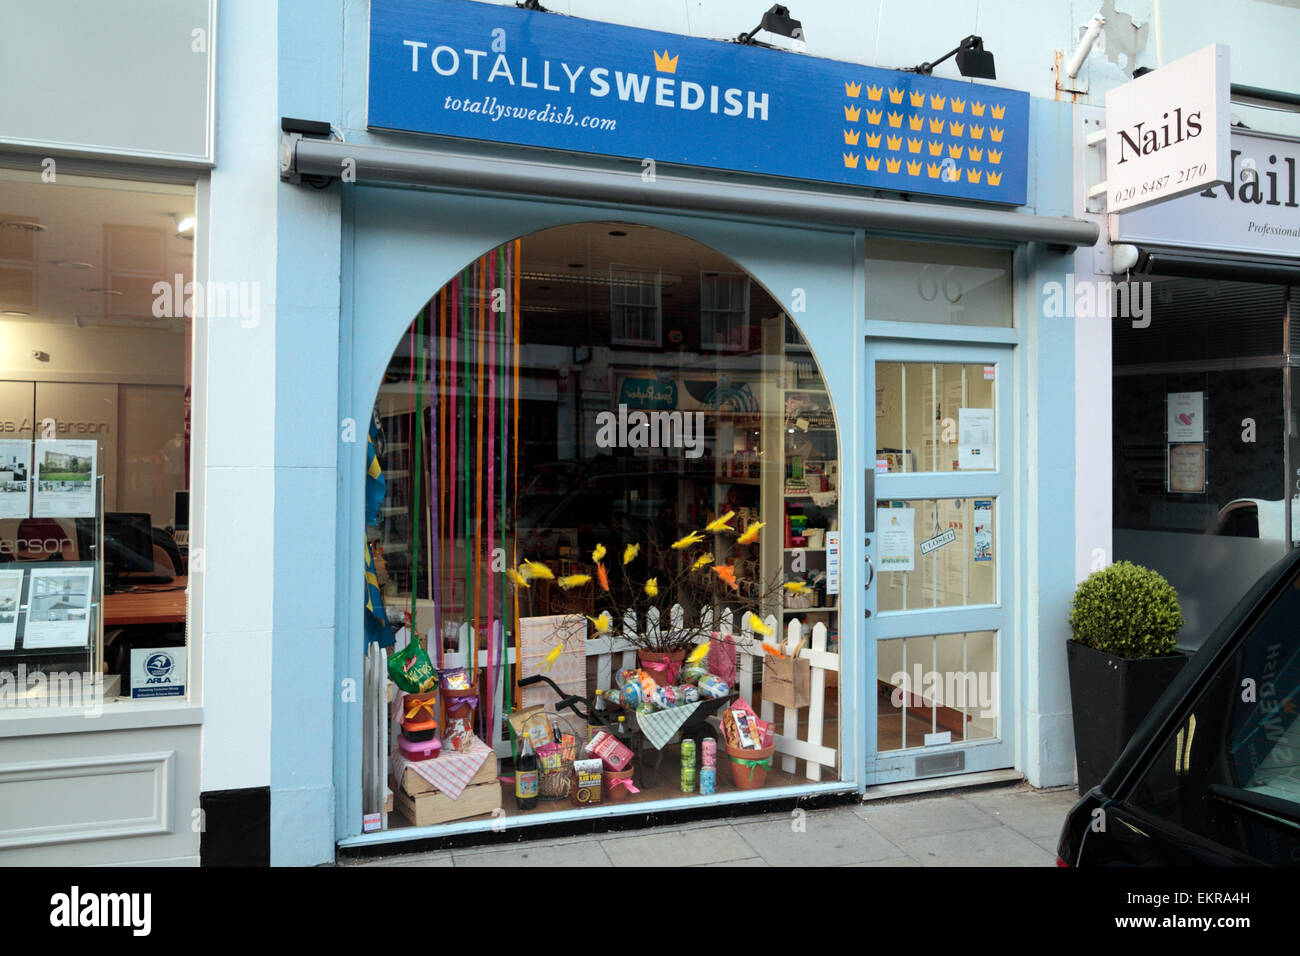 The Totally Swedish shop on Barnes High St, London SW13, UK. Stock Photo